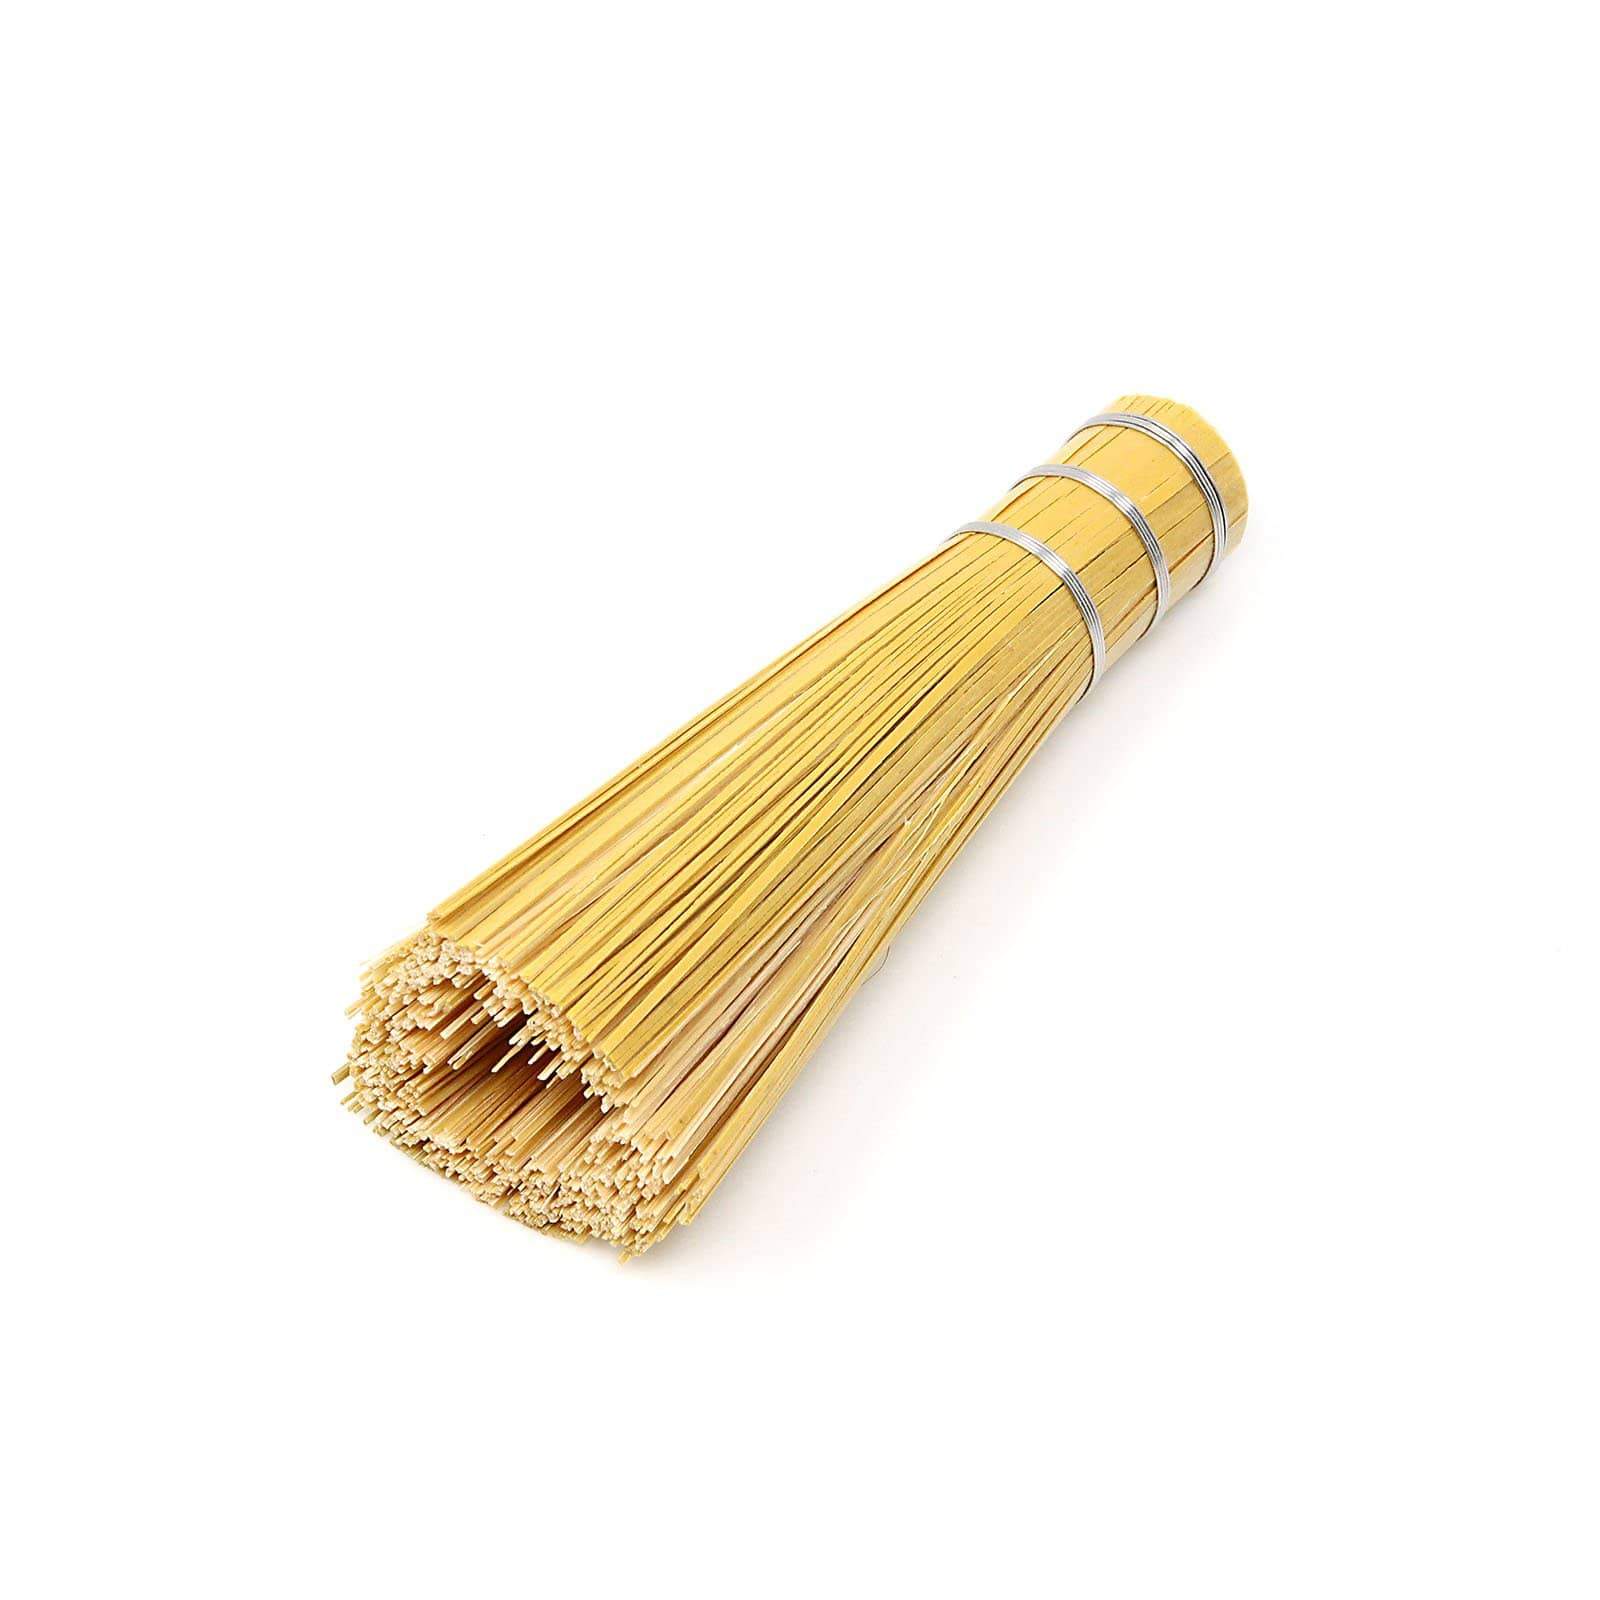 Sasara Bamboo Scrubbing Brush 12cm Cleaning Brushes